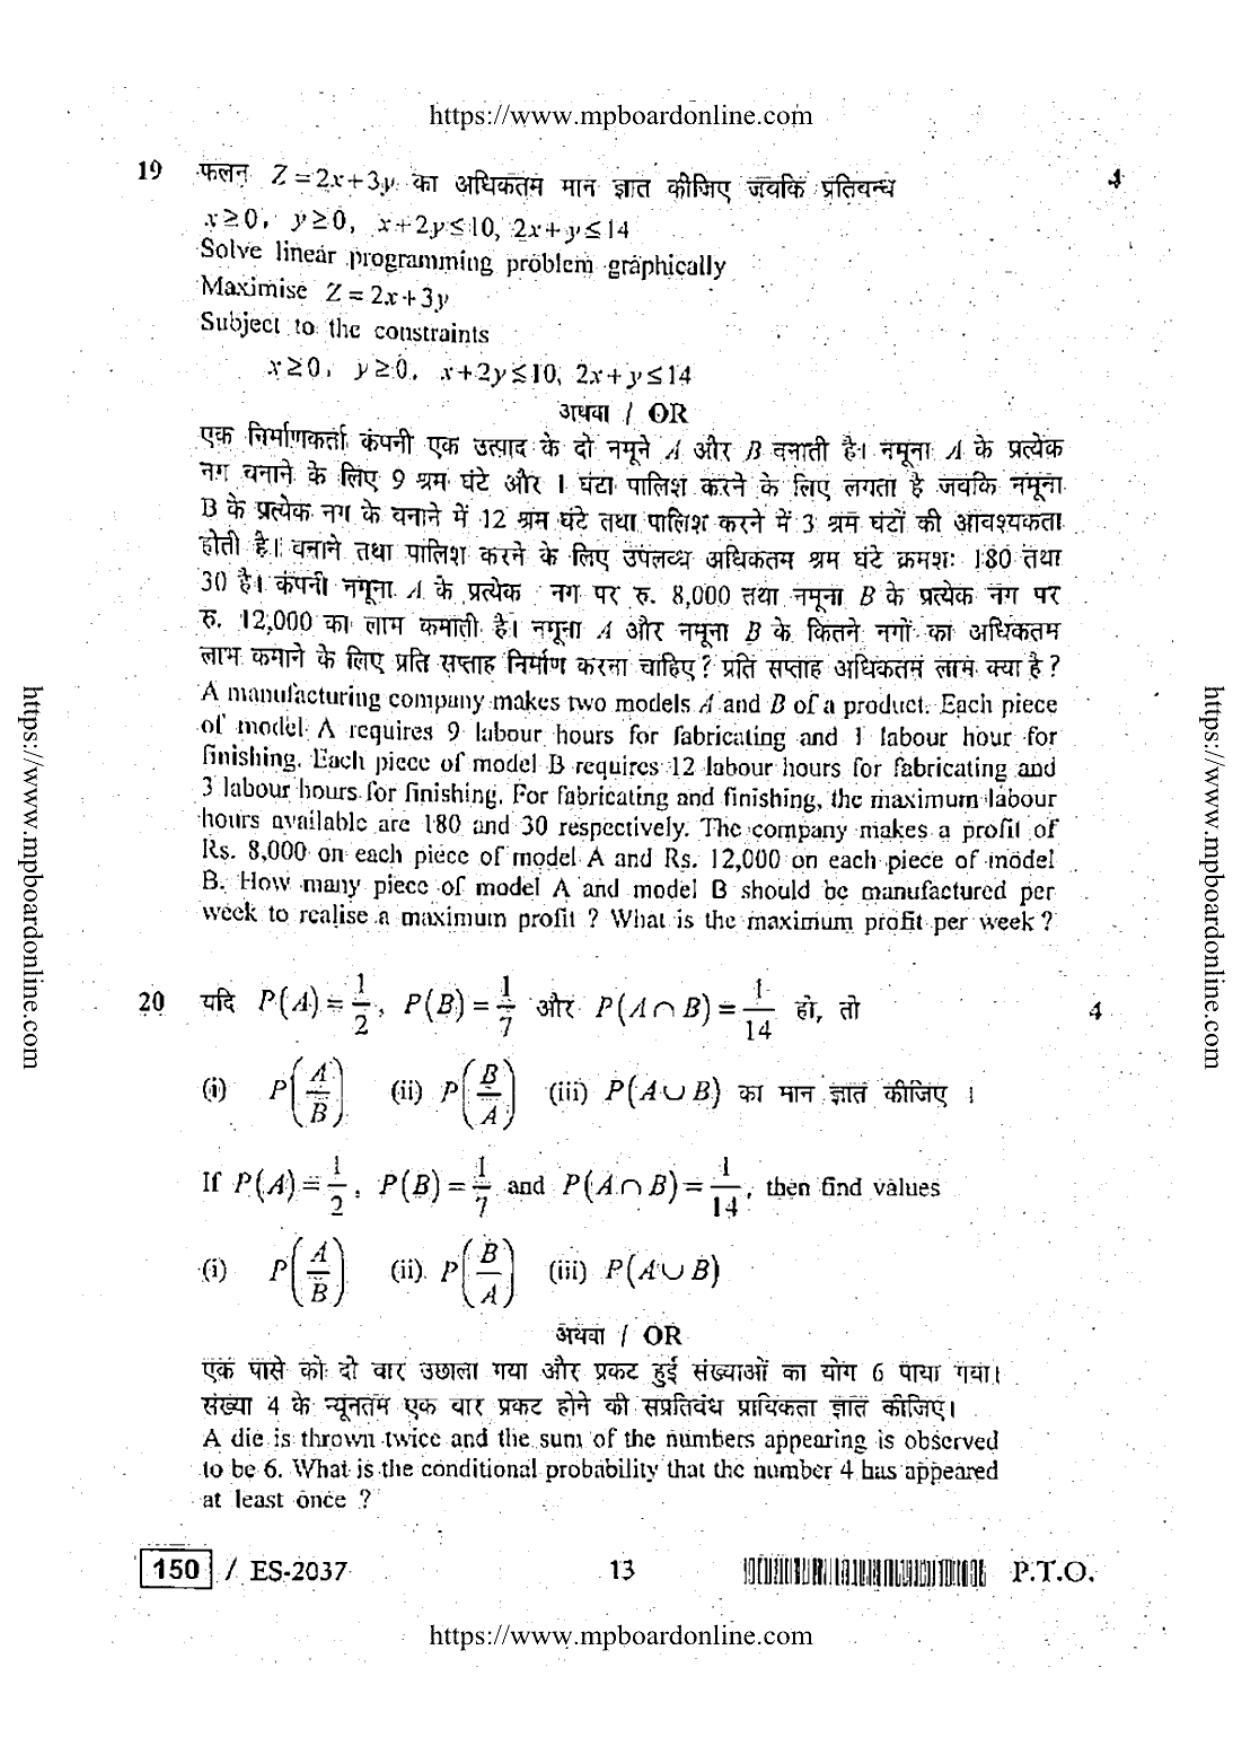 MP Board Class 12 Mathematica 2019 Question Paper - Page 12